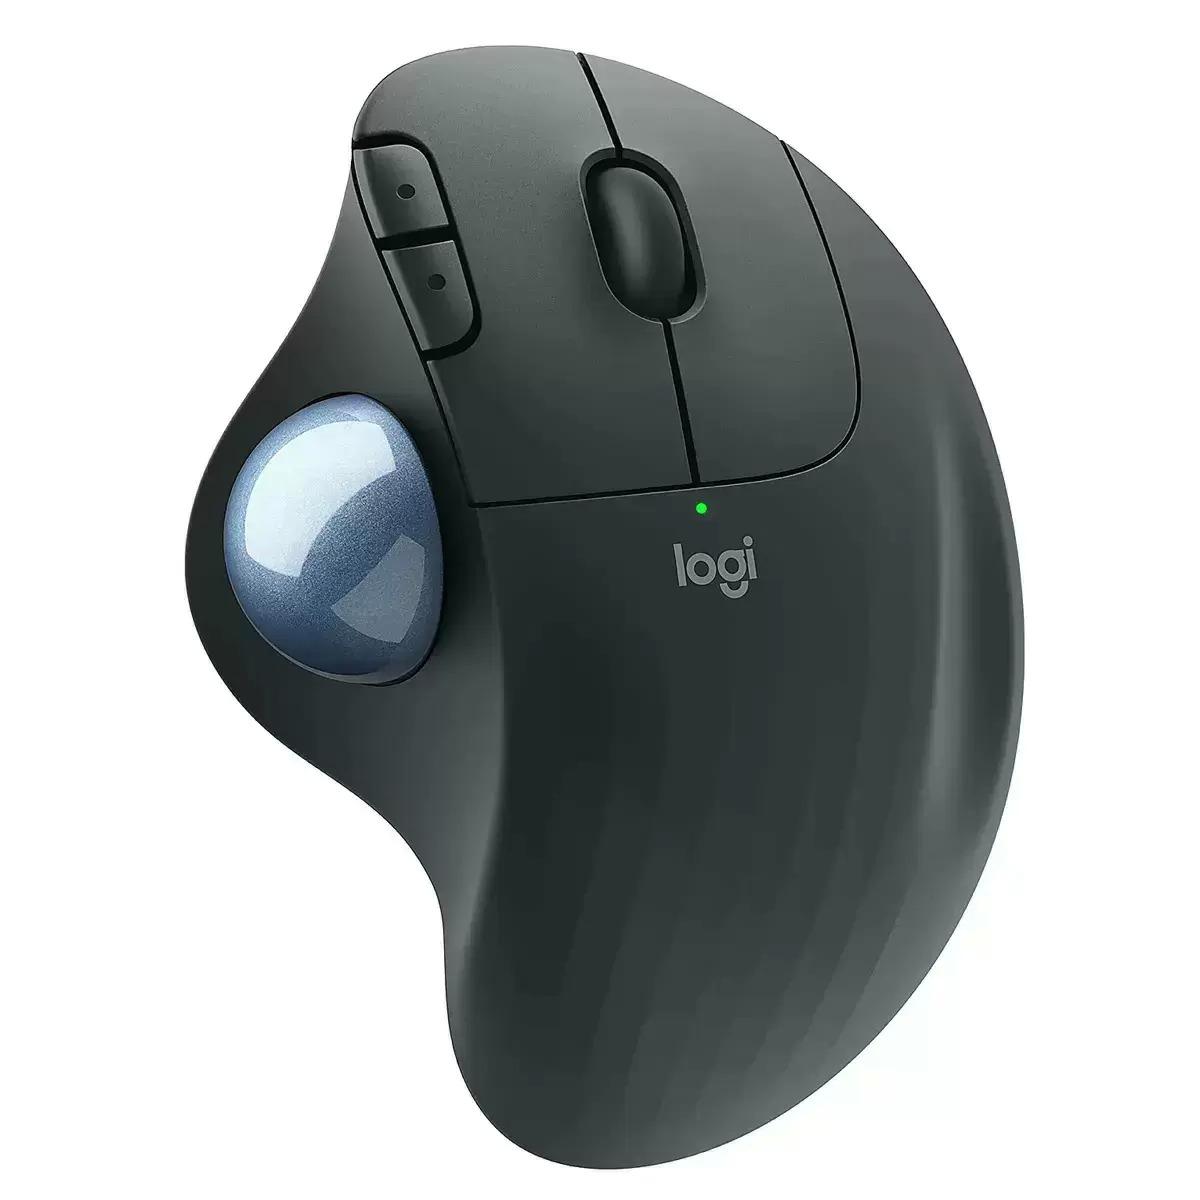 Logitech Ergo M575 Wireless Trackball Mouse for $39.97 Shipped